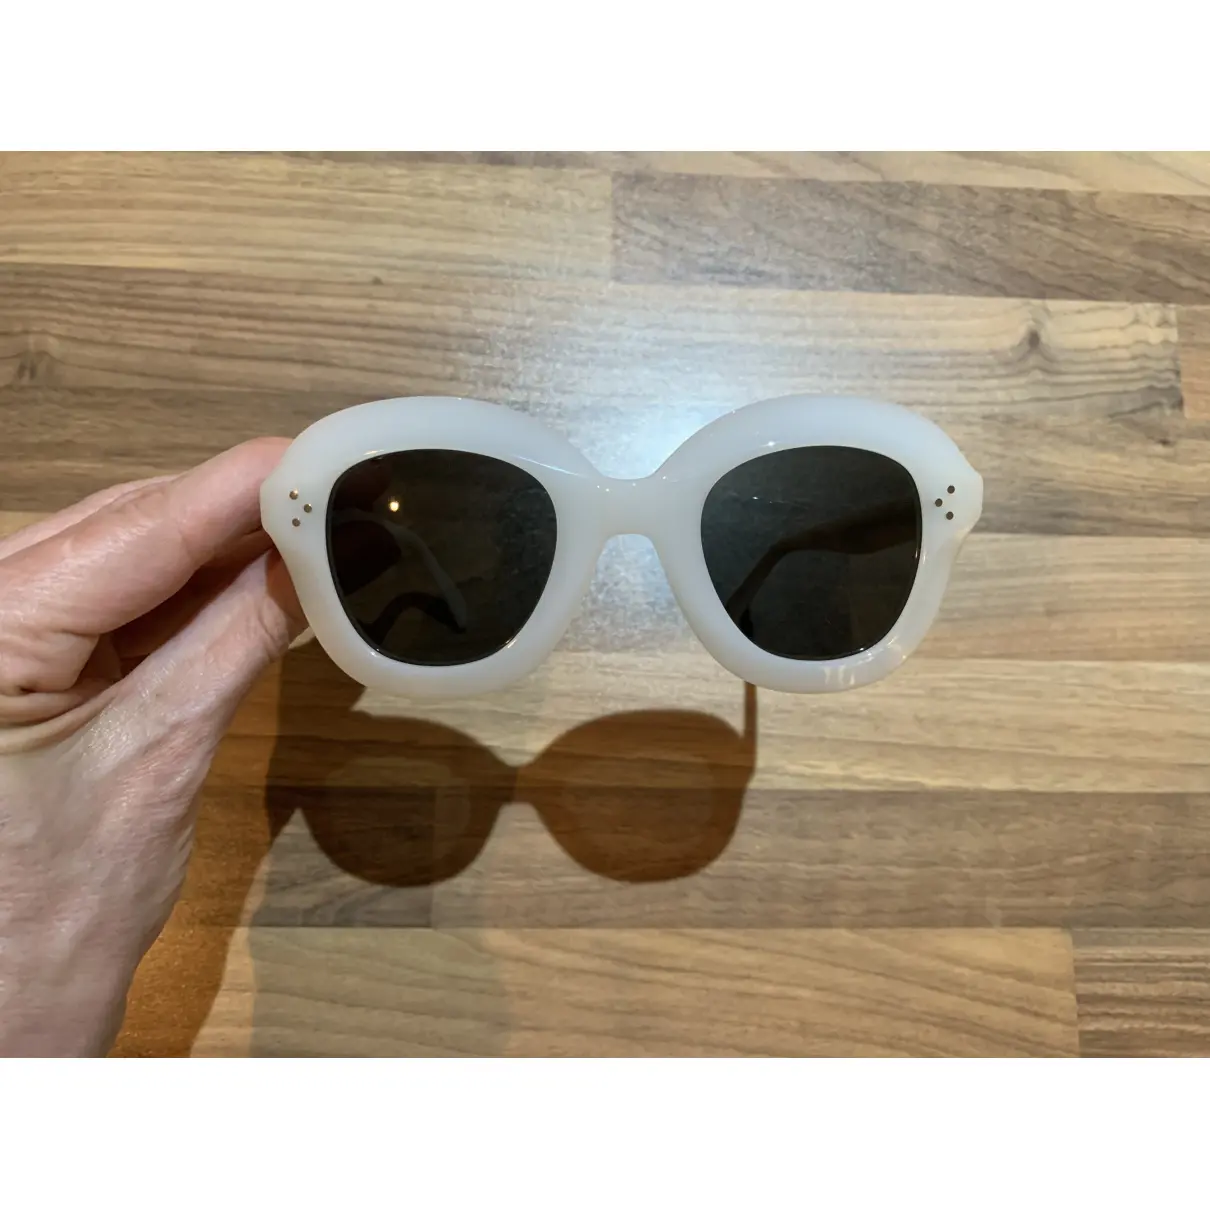 Buy Celine New Audrey oversized sunglasses online